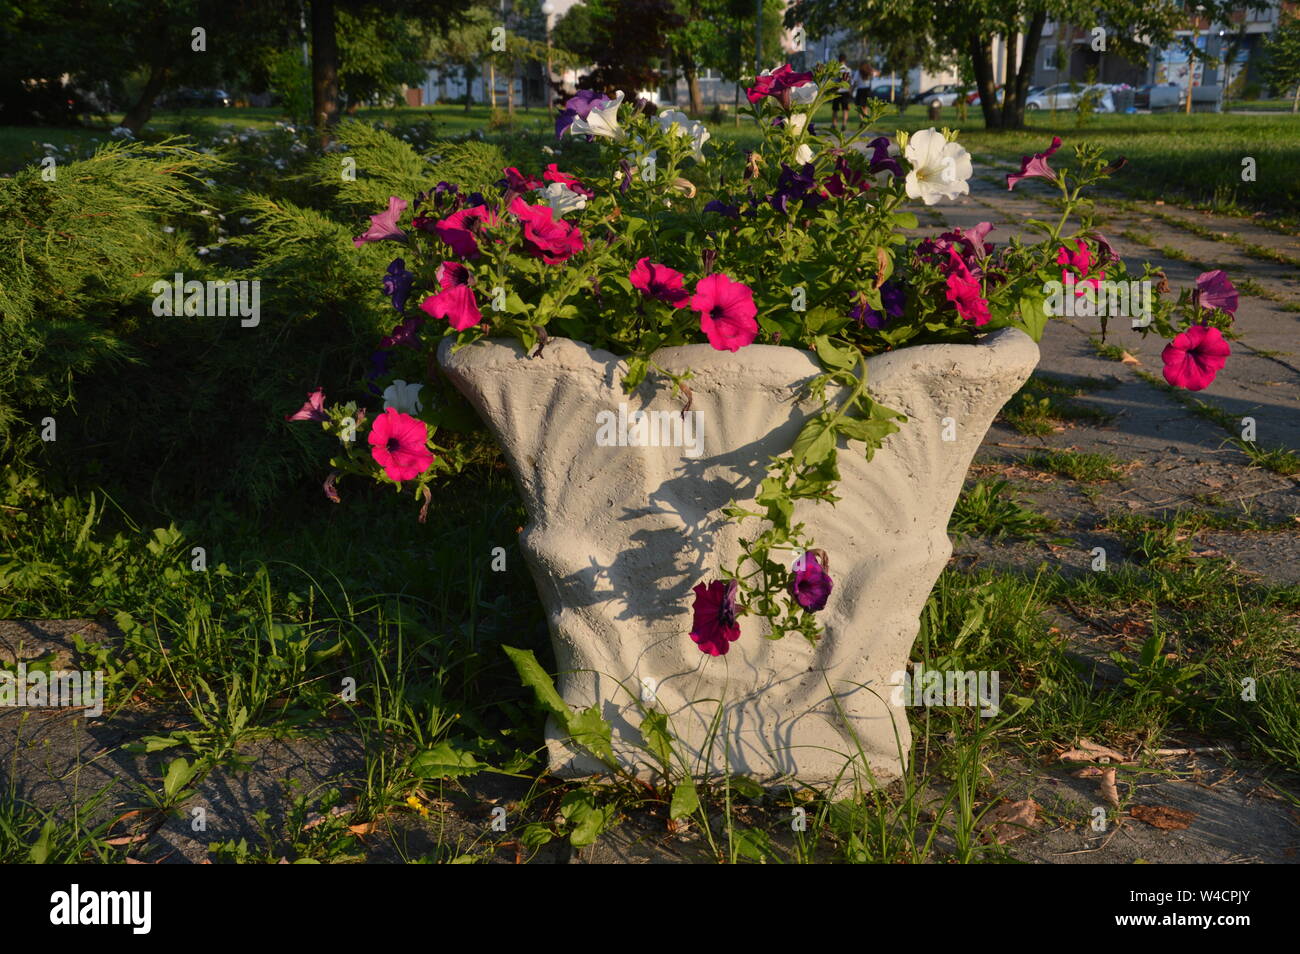 Decorative concrete jardiner for flower Stock Photo